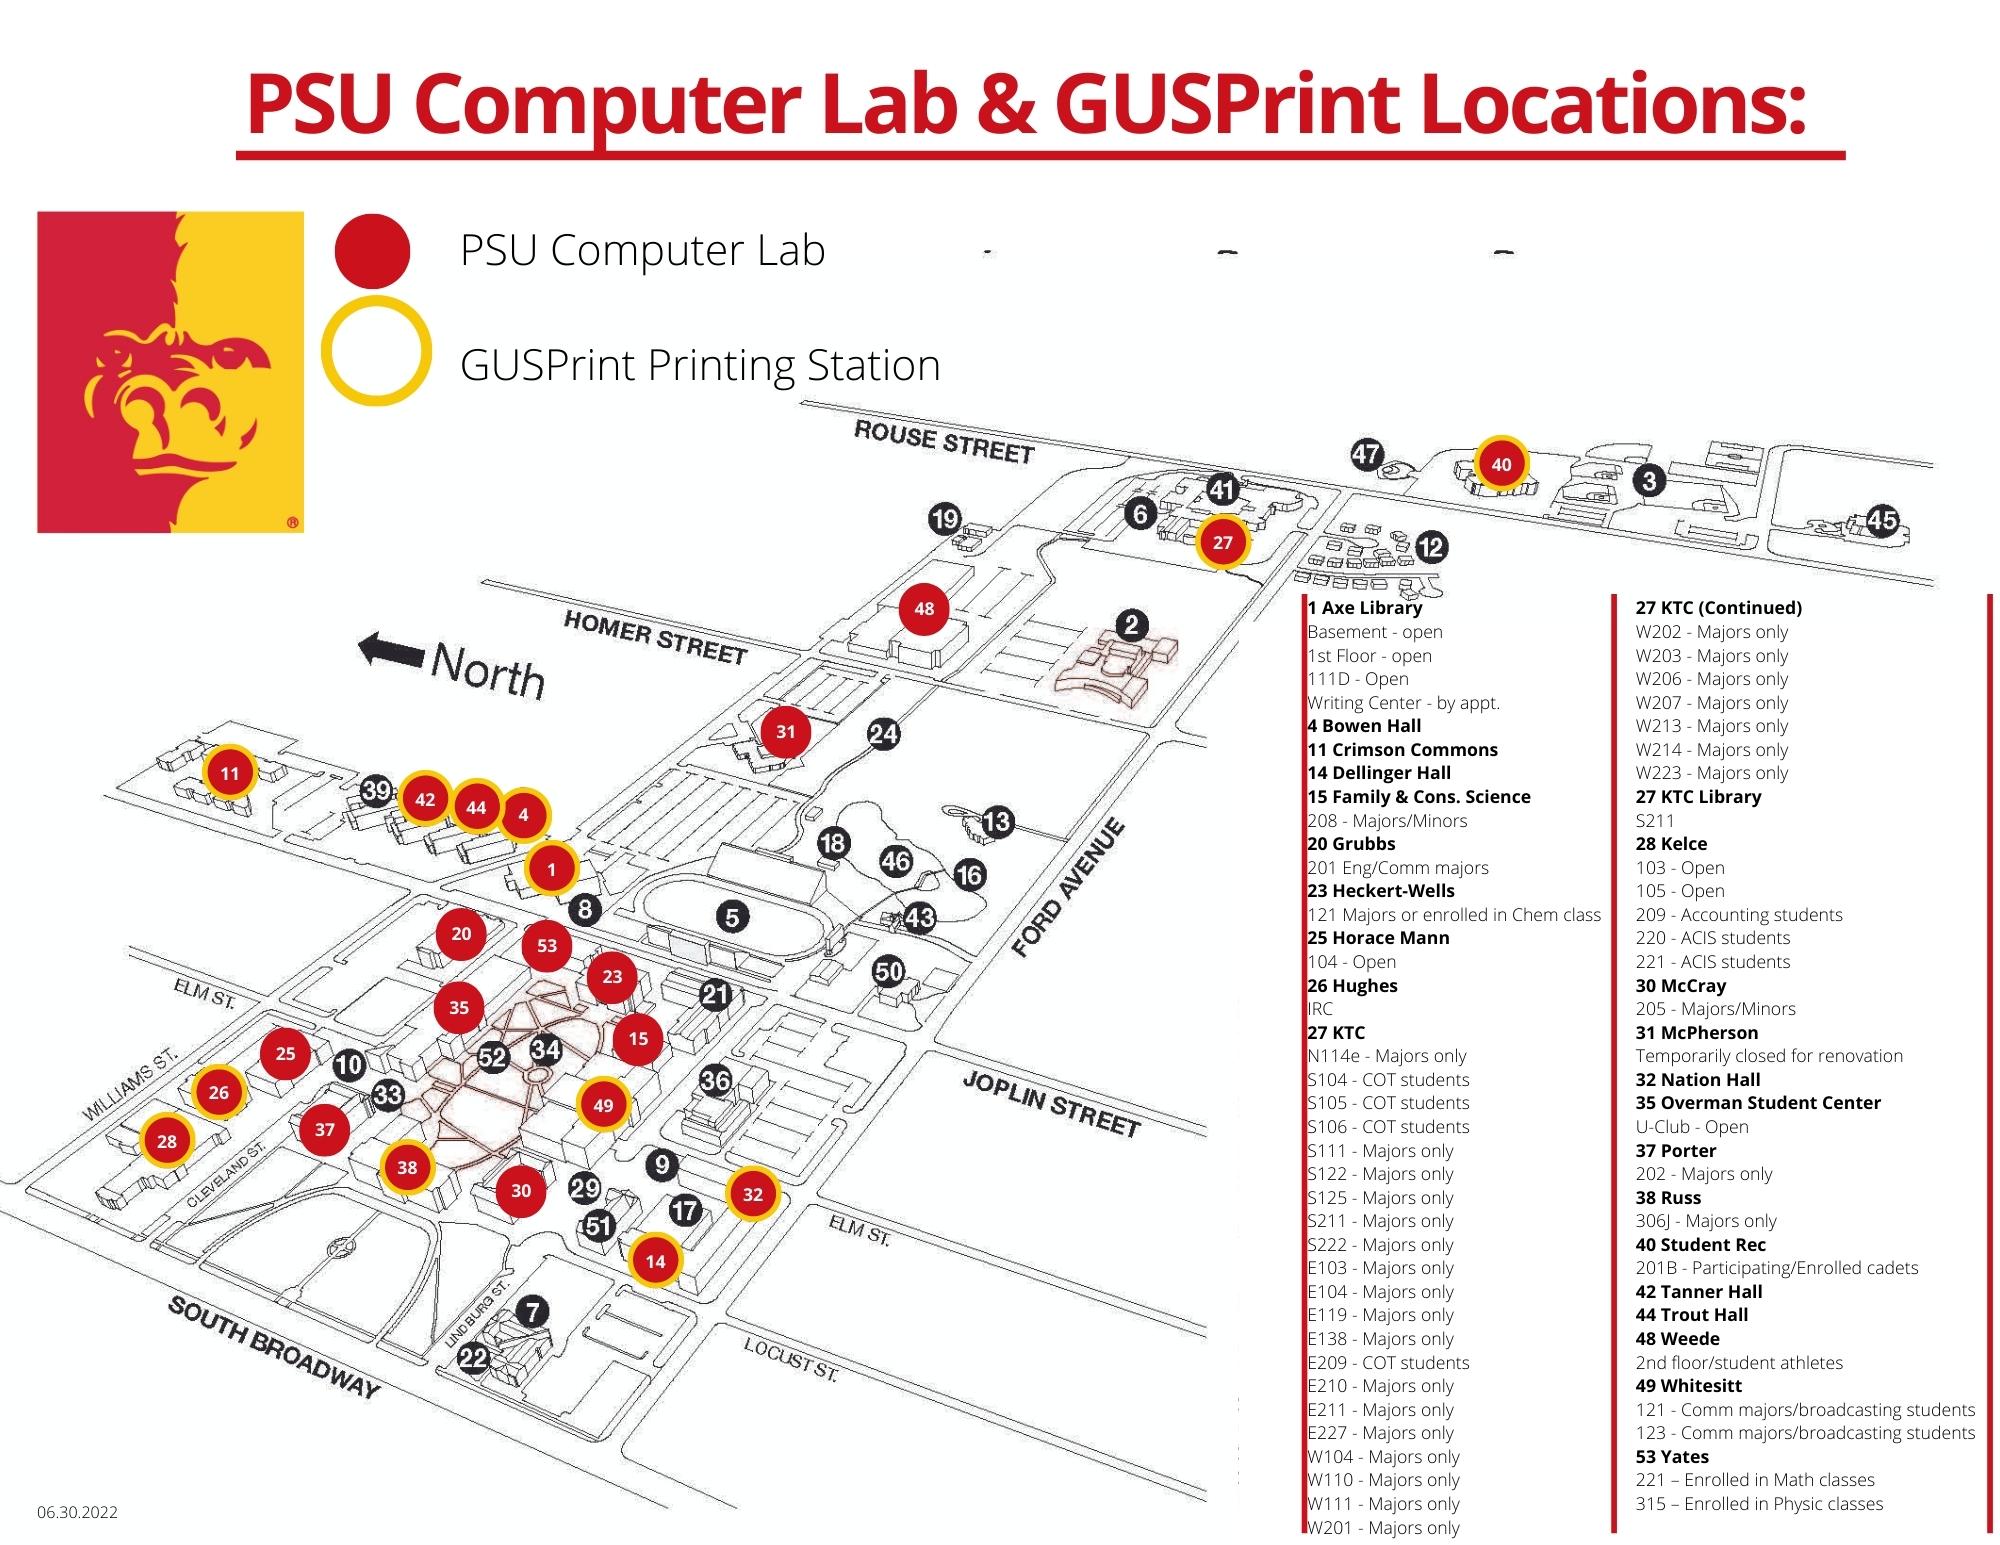 psu-computer-labs-gusprint